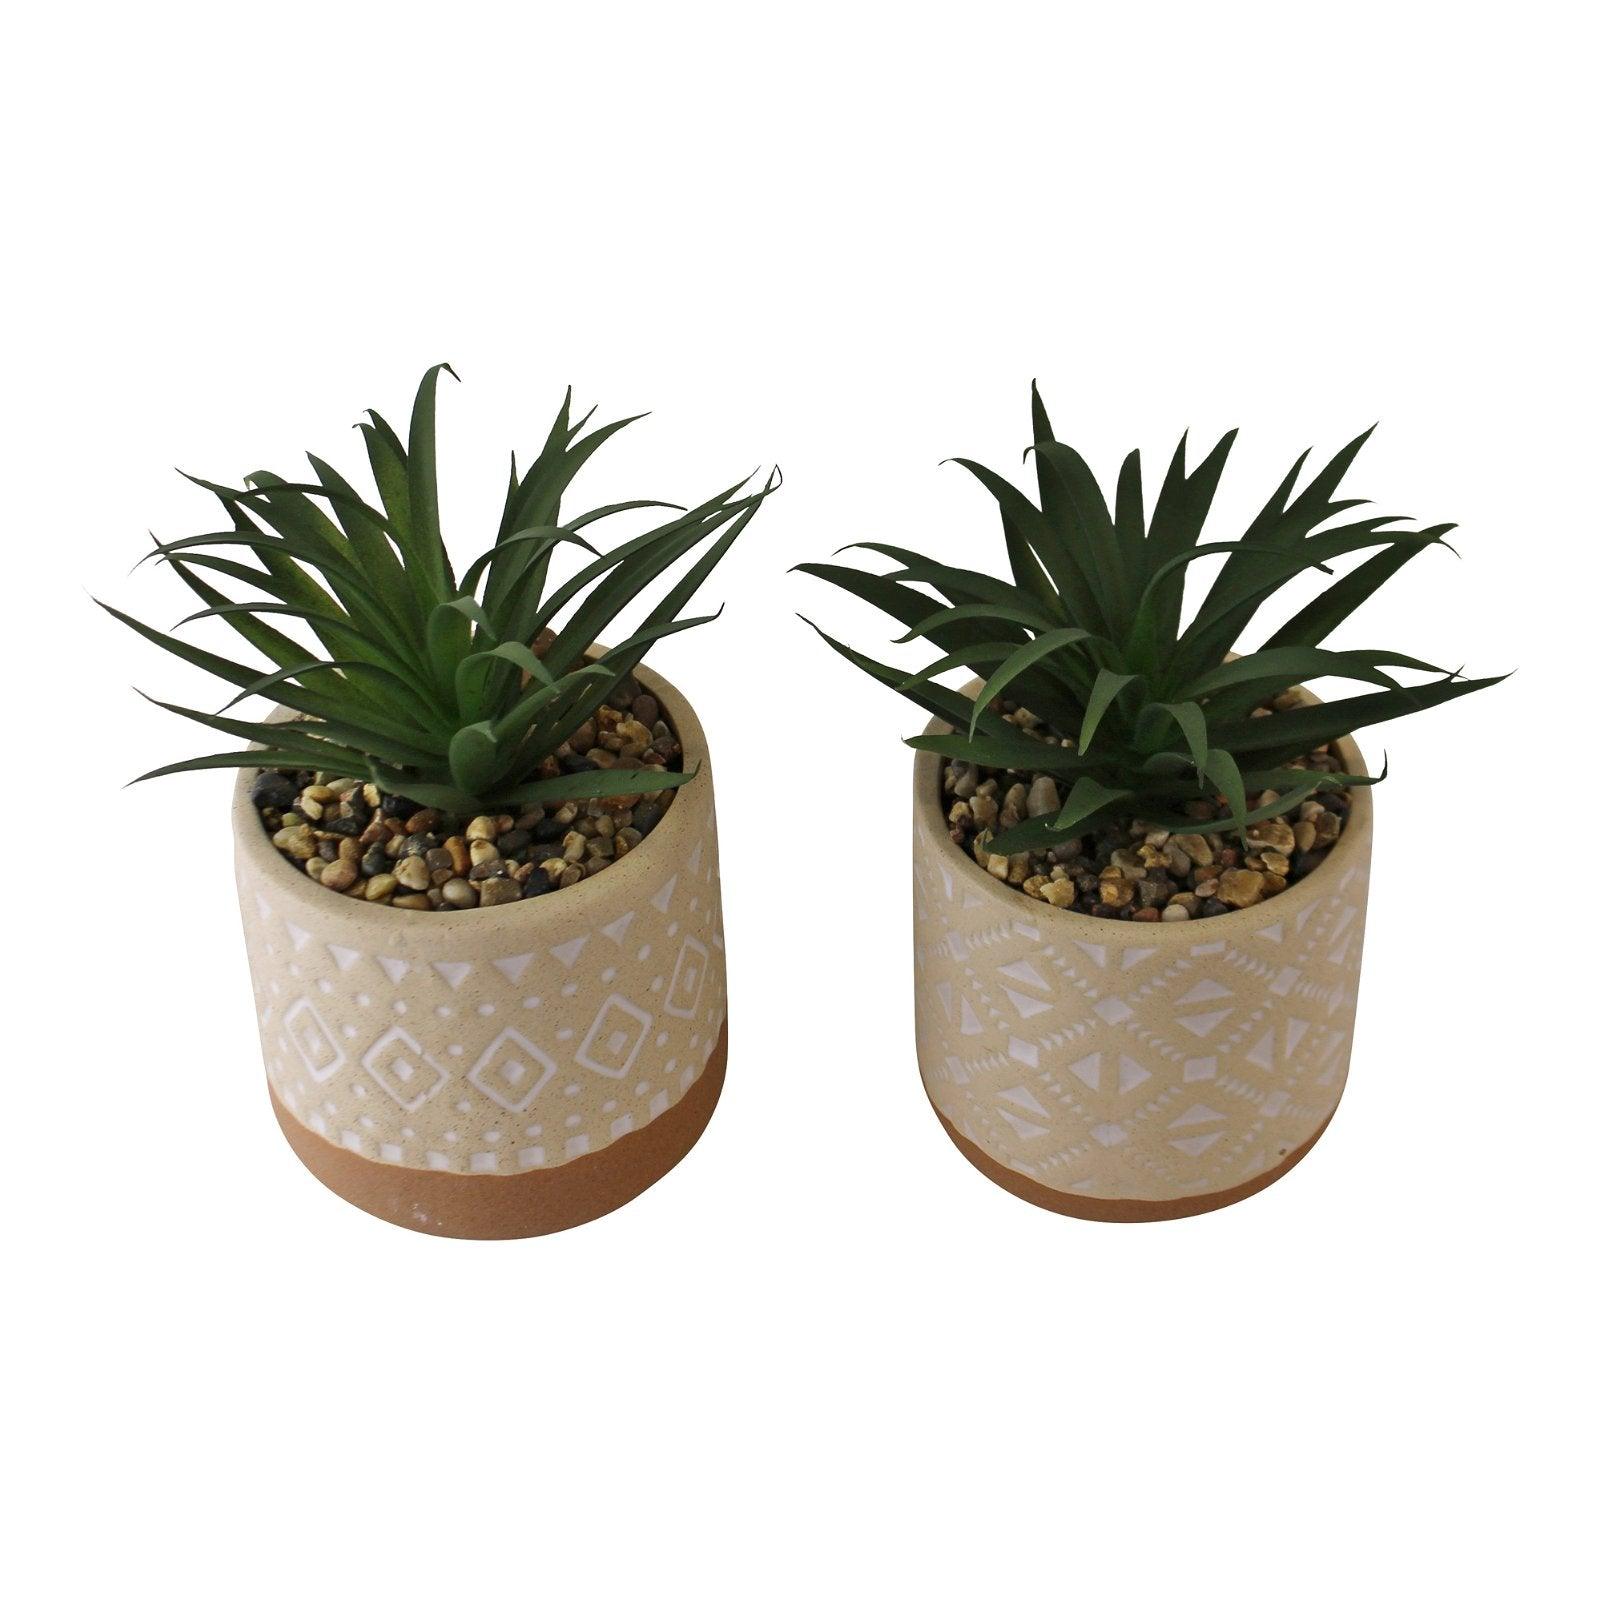 View Set of 2 Faux Succulents In Ceramic Pots information